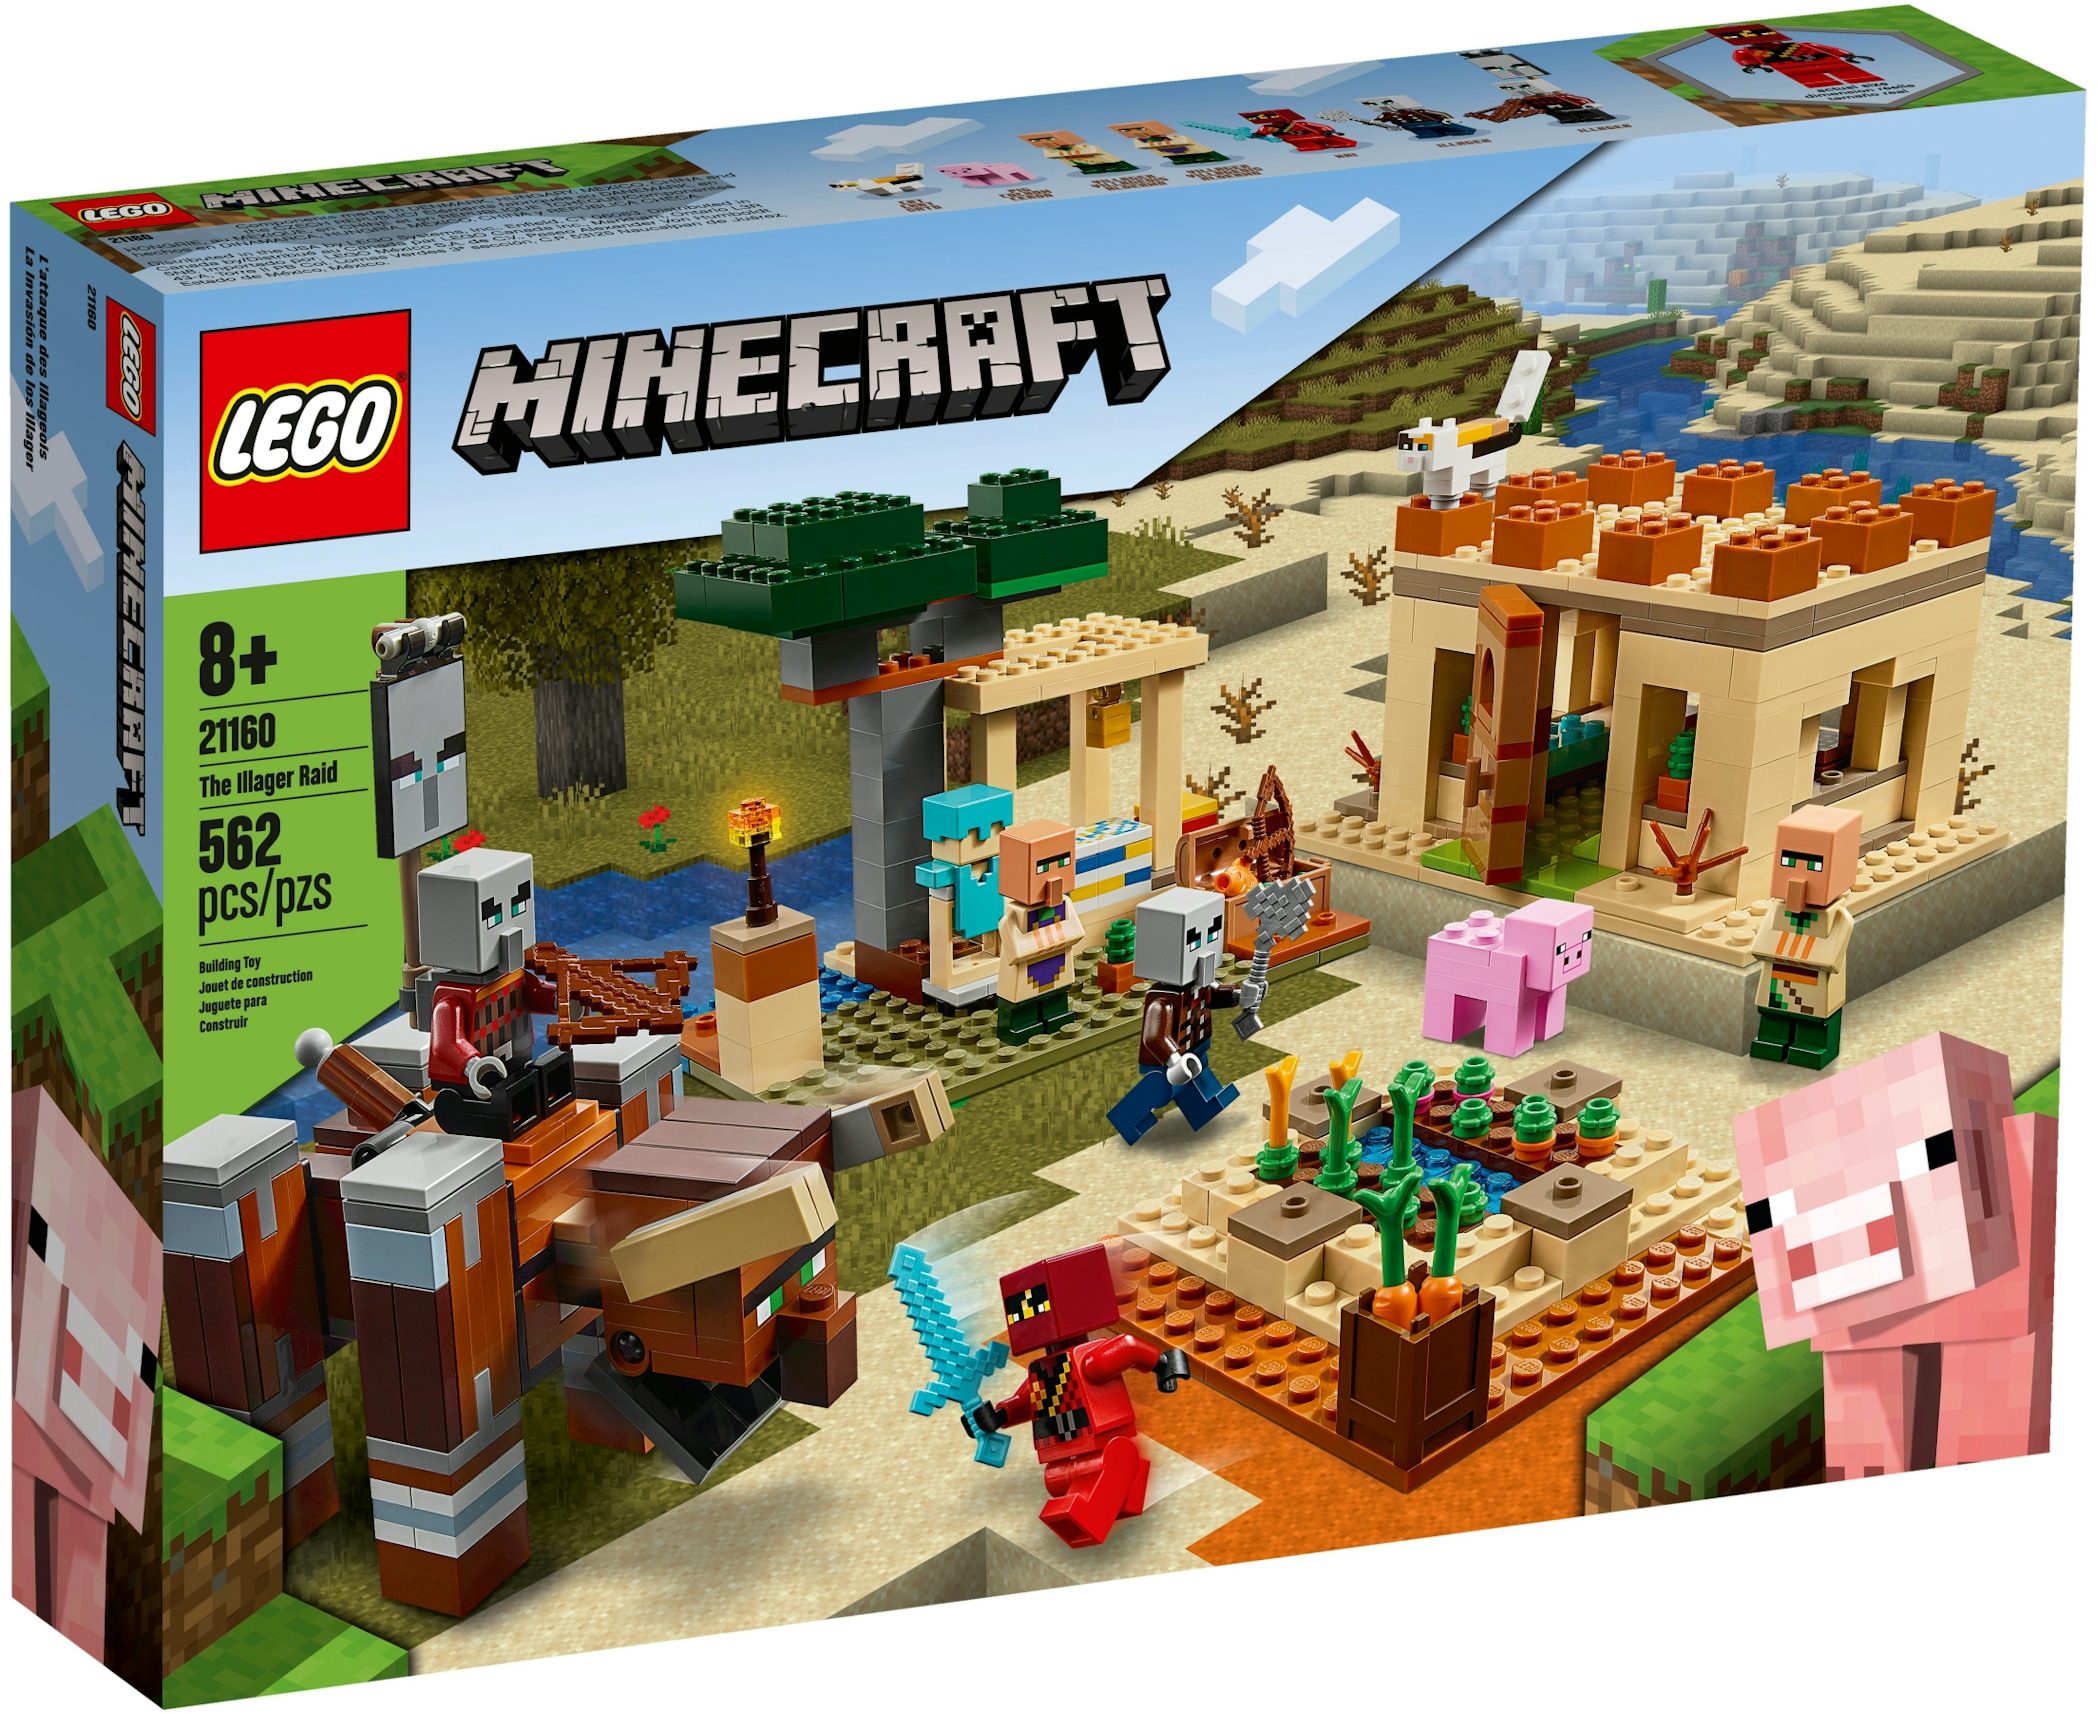 https://images.stockx.com/images/LEGO-Minecraft-The-Illager-Raid-Set-21160.jpg?fit=fill&bg=FFFFFF&w=1200&h=857&fm=jpg&auto=compress&dpr=2&trim=color&updated_at=1615851163&q=60